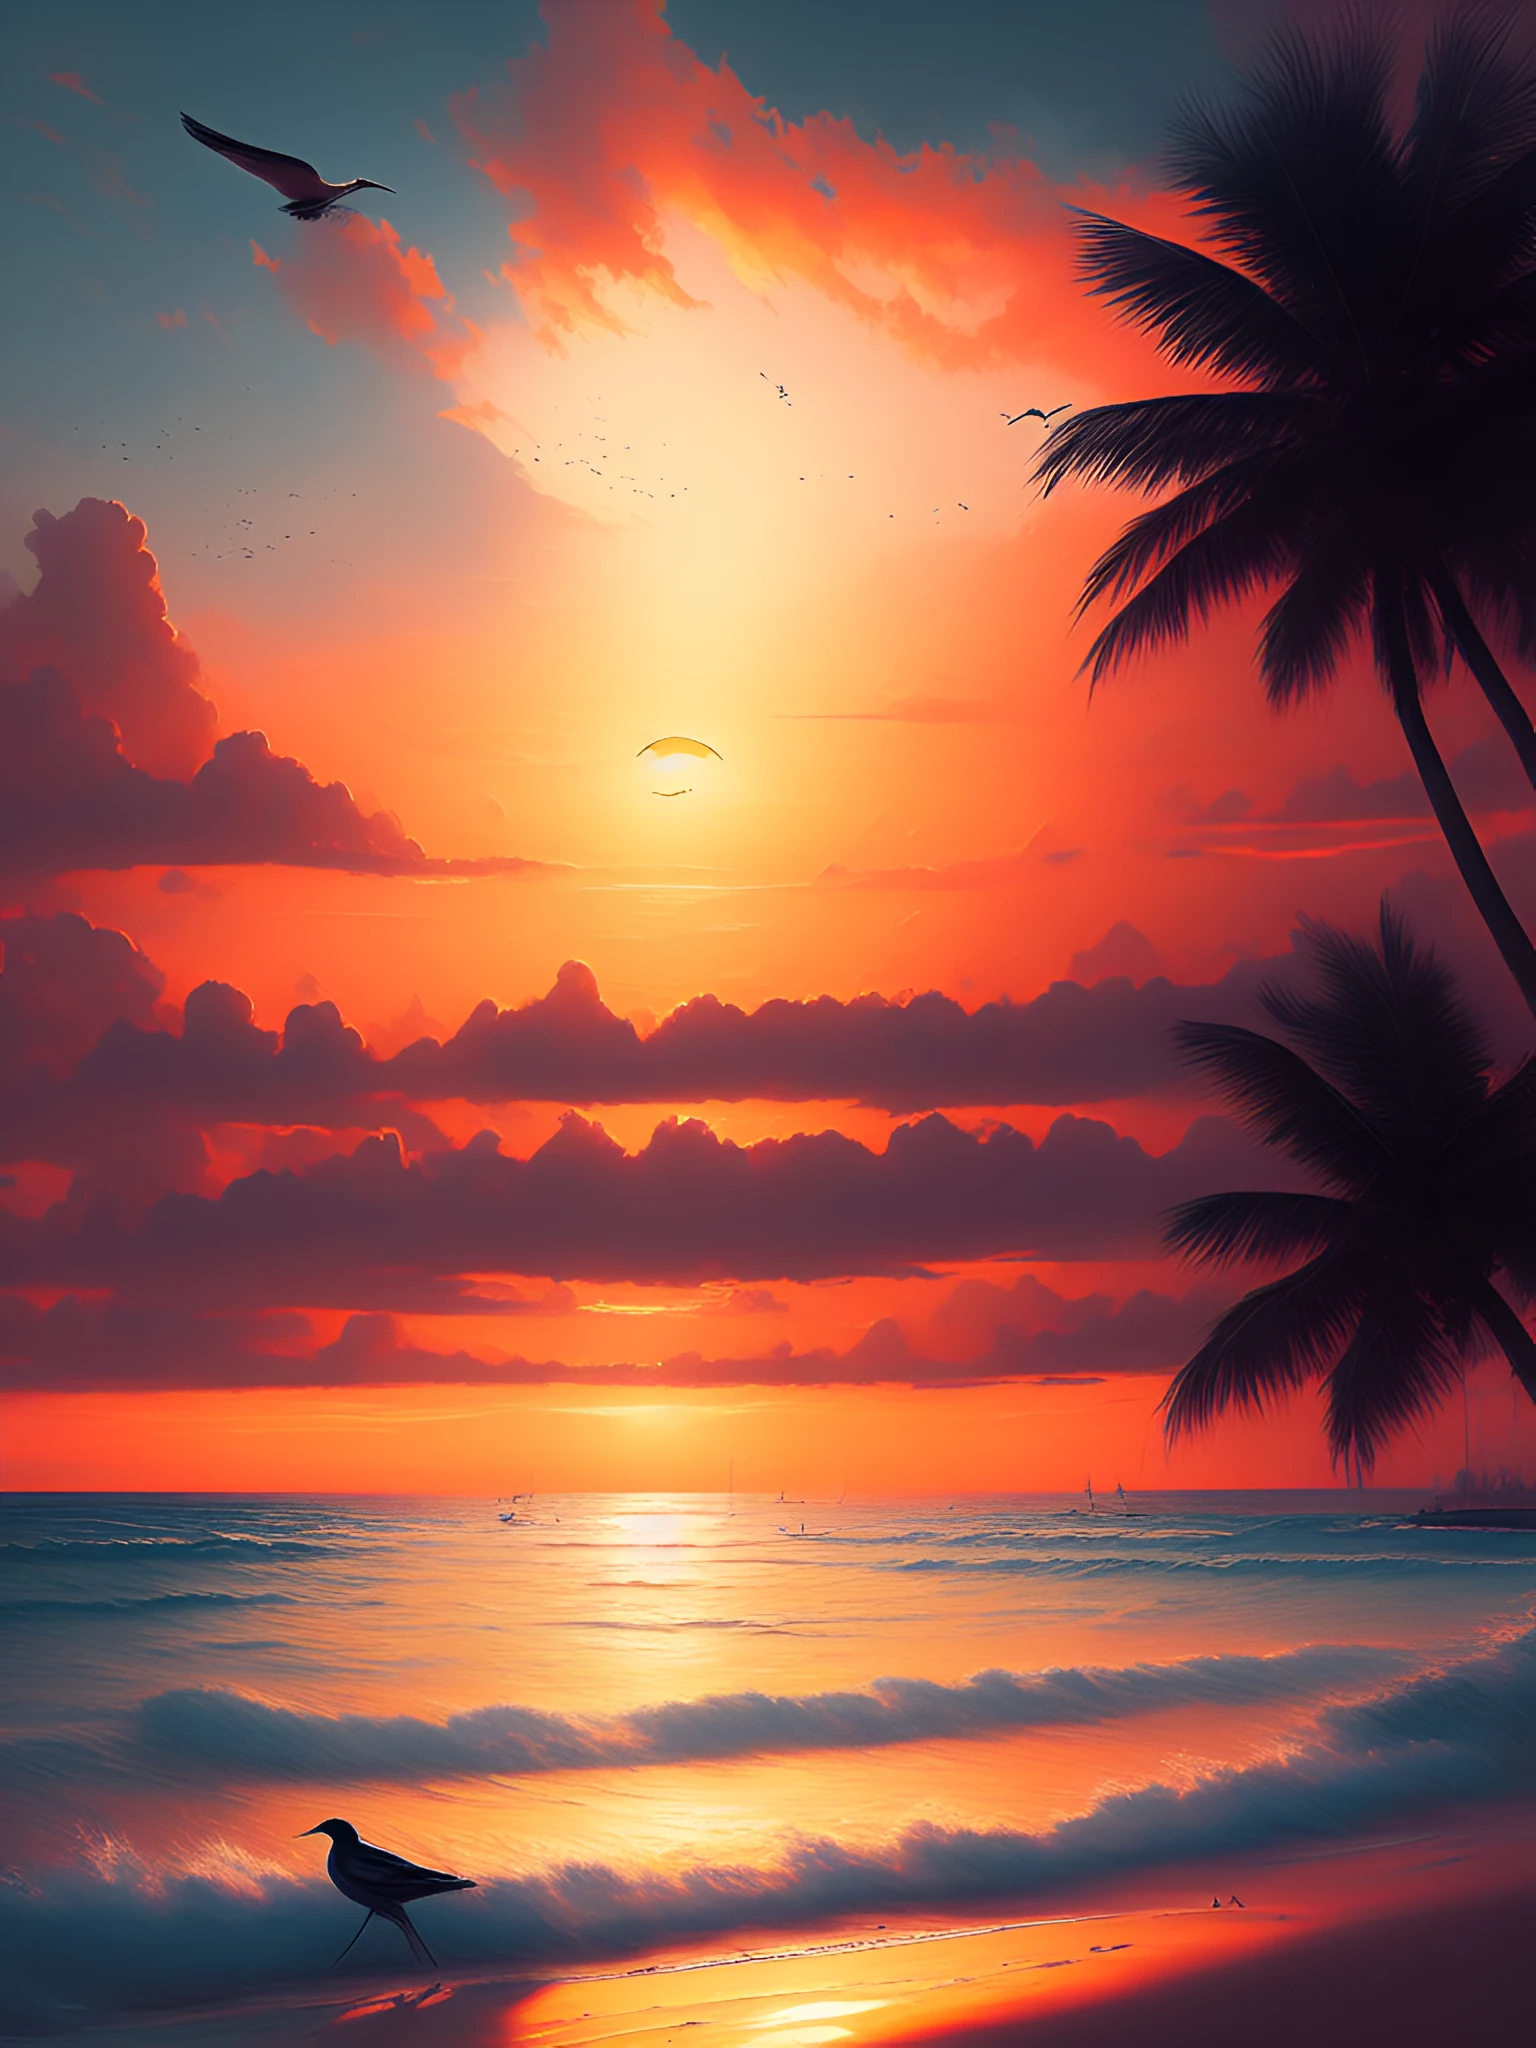 Dreamlikeart картина с изображением прекрасного райского закатного пляжа, солнце посередине, далеко птица летит над горизонтом, в тренде на artstation в стиле Грега Рутковски